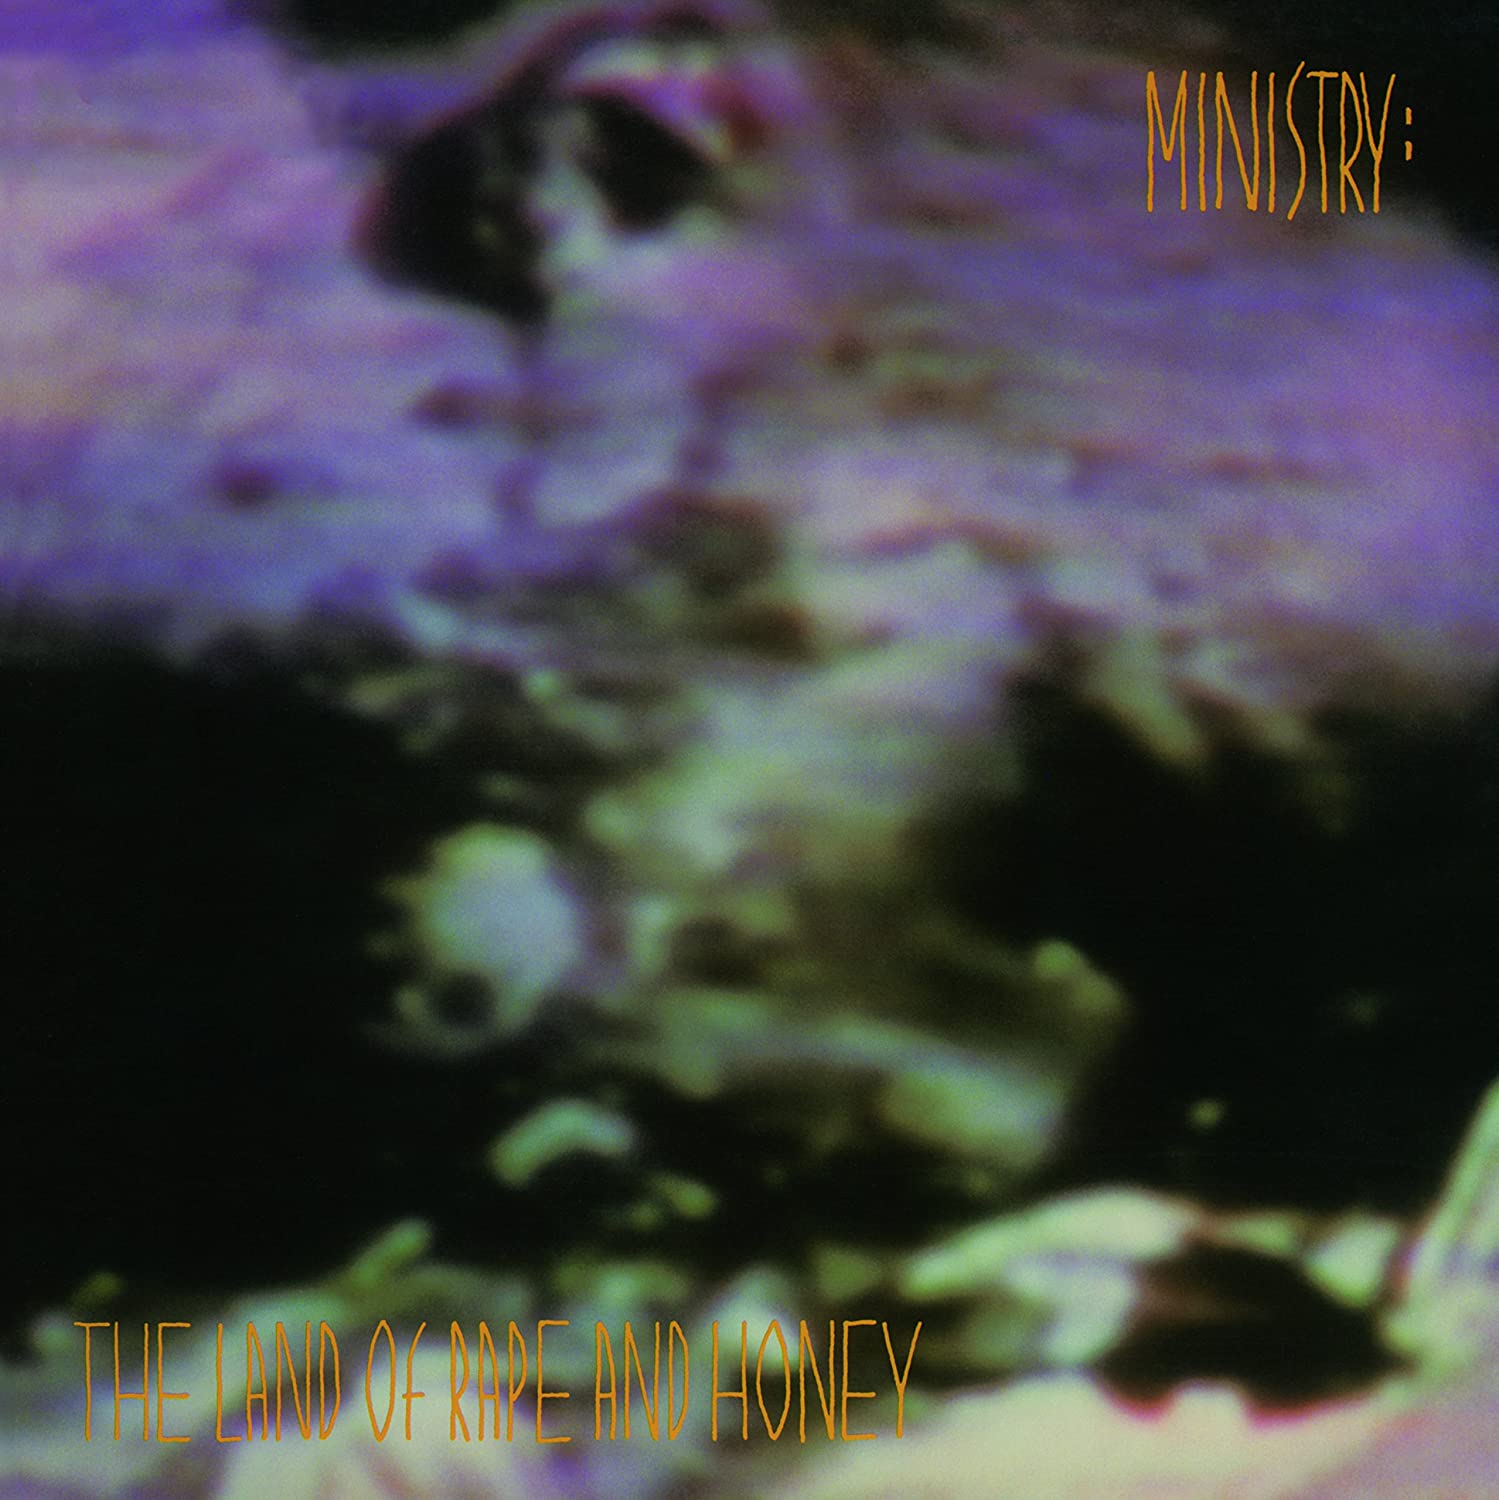 Ministry - The Land of Rape and Honey (Vinyl LP)